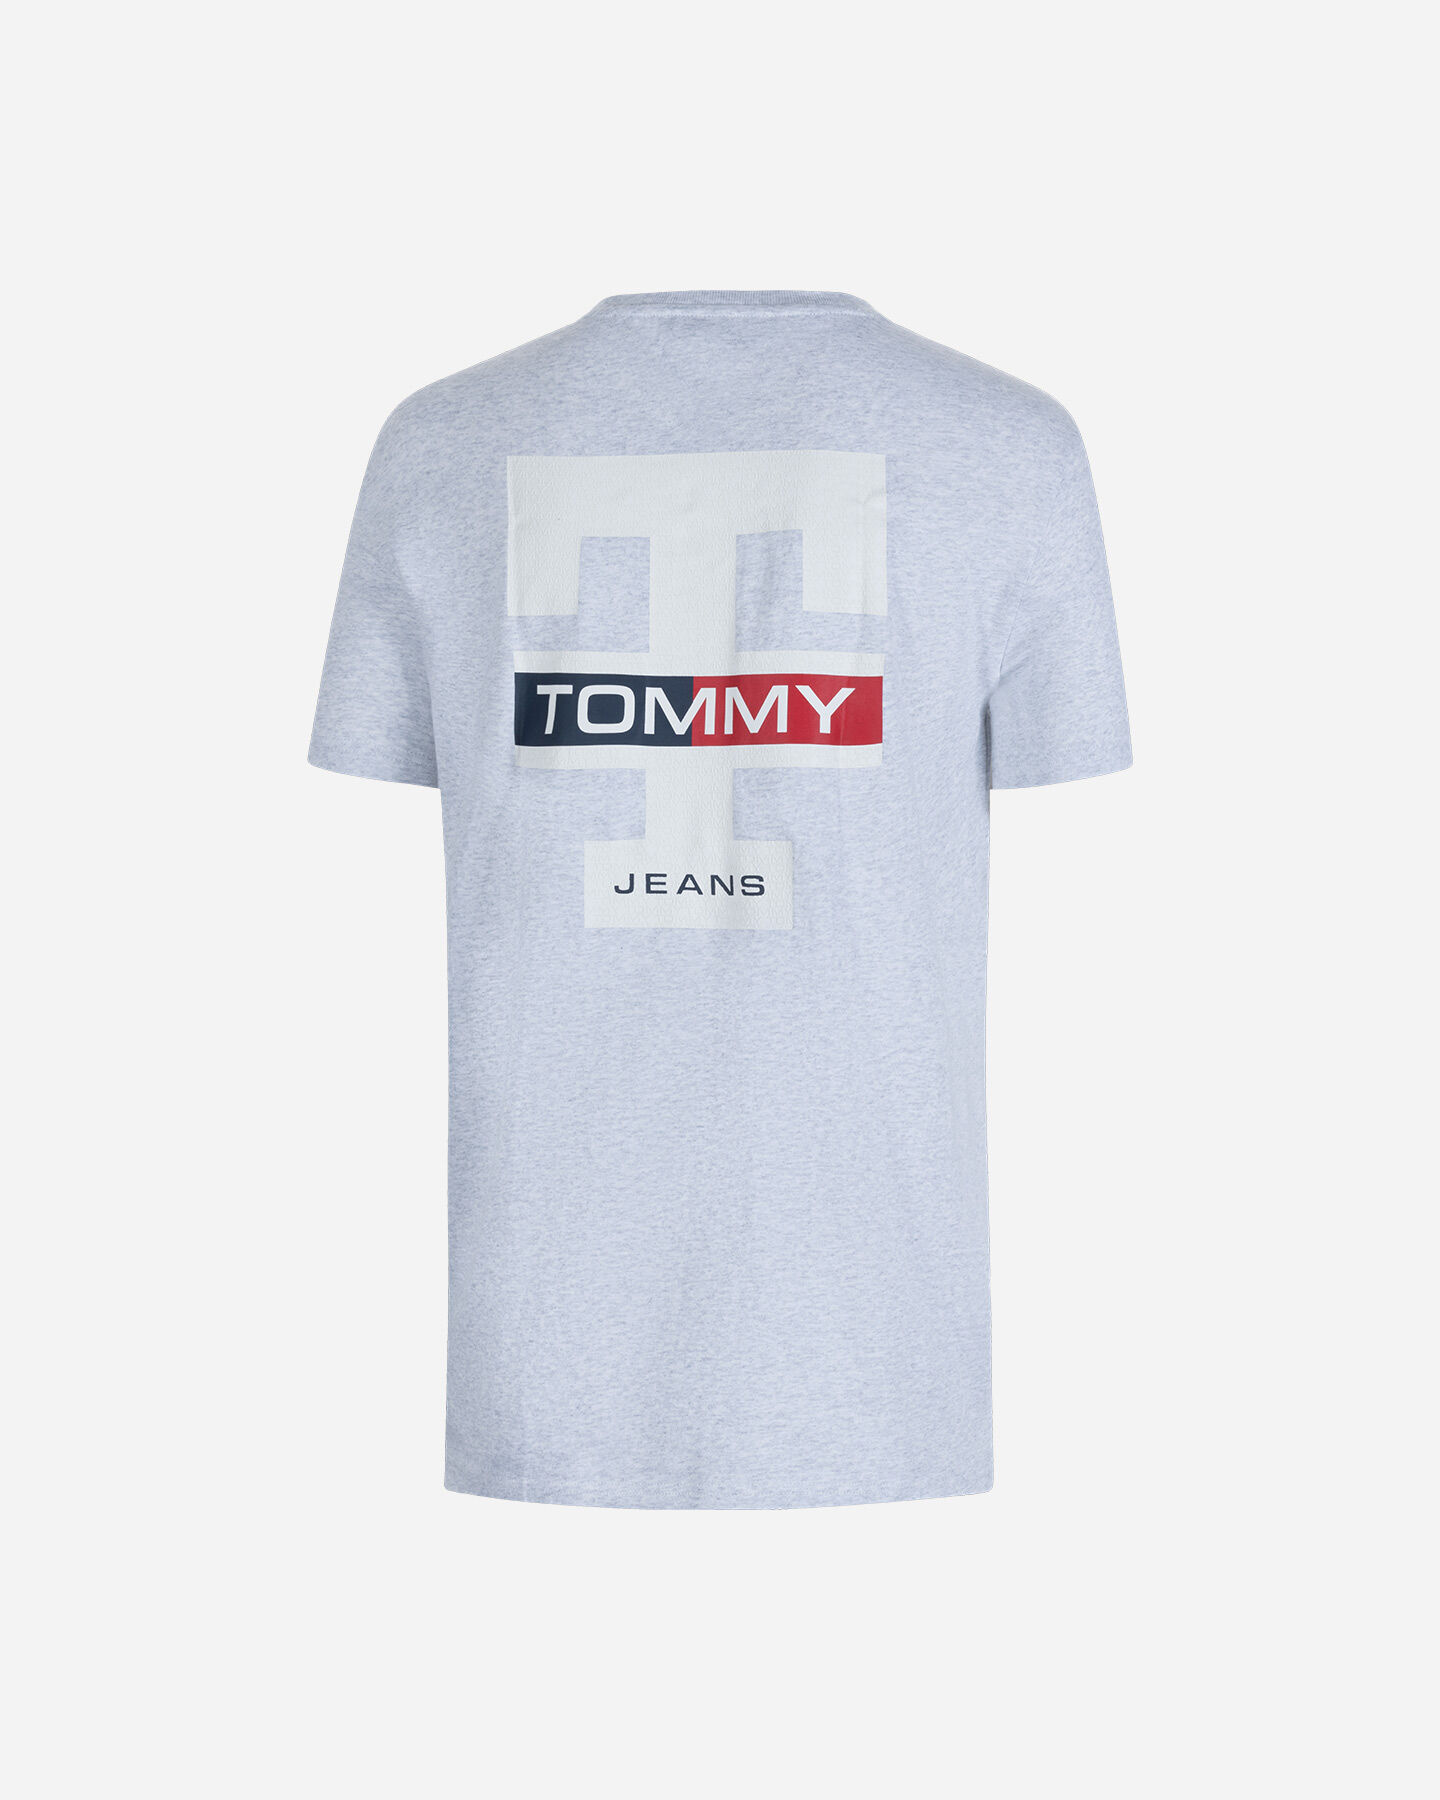  T-Shirt TOMMY HILFIGER RETRO BIG LOGO M S5615405|UNI|S scatto 1